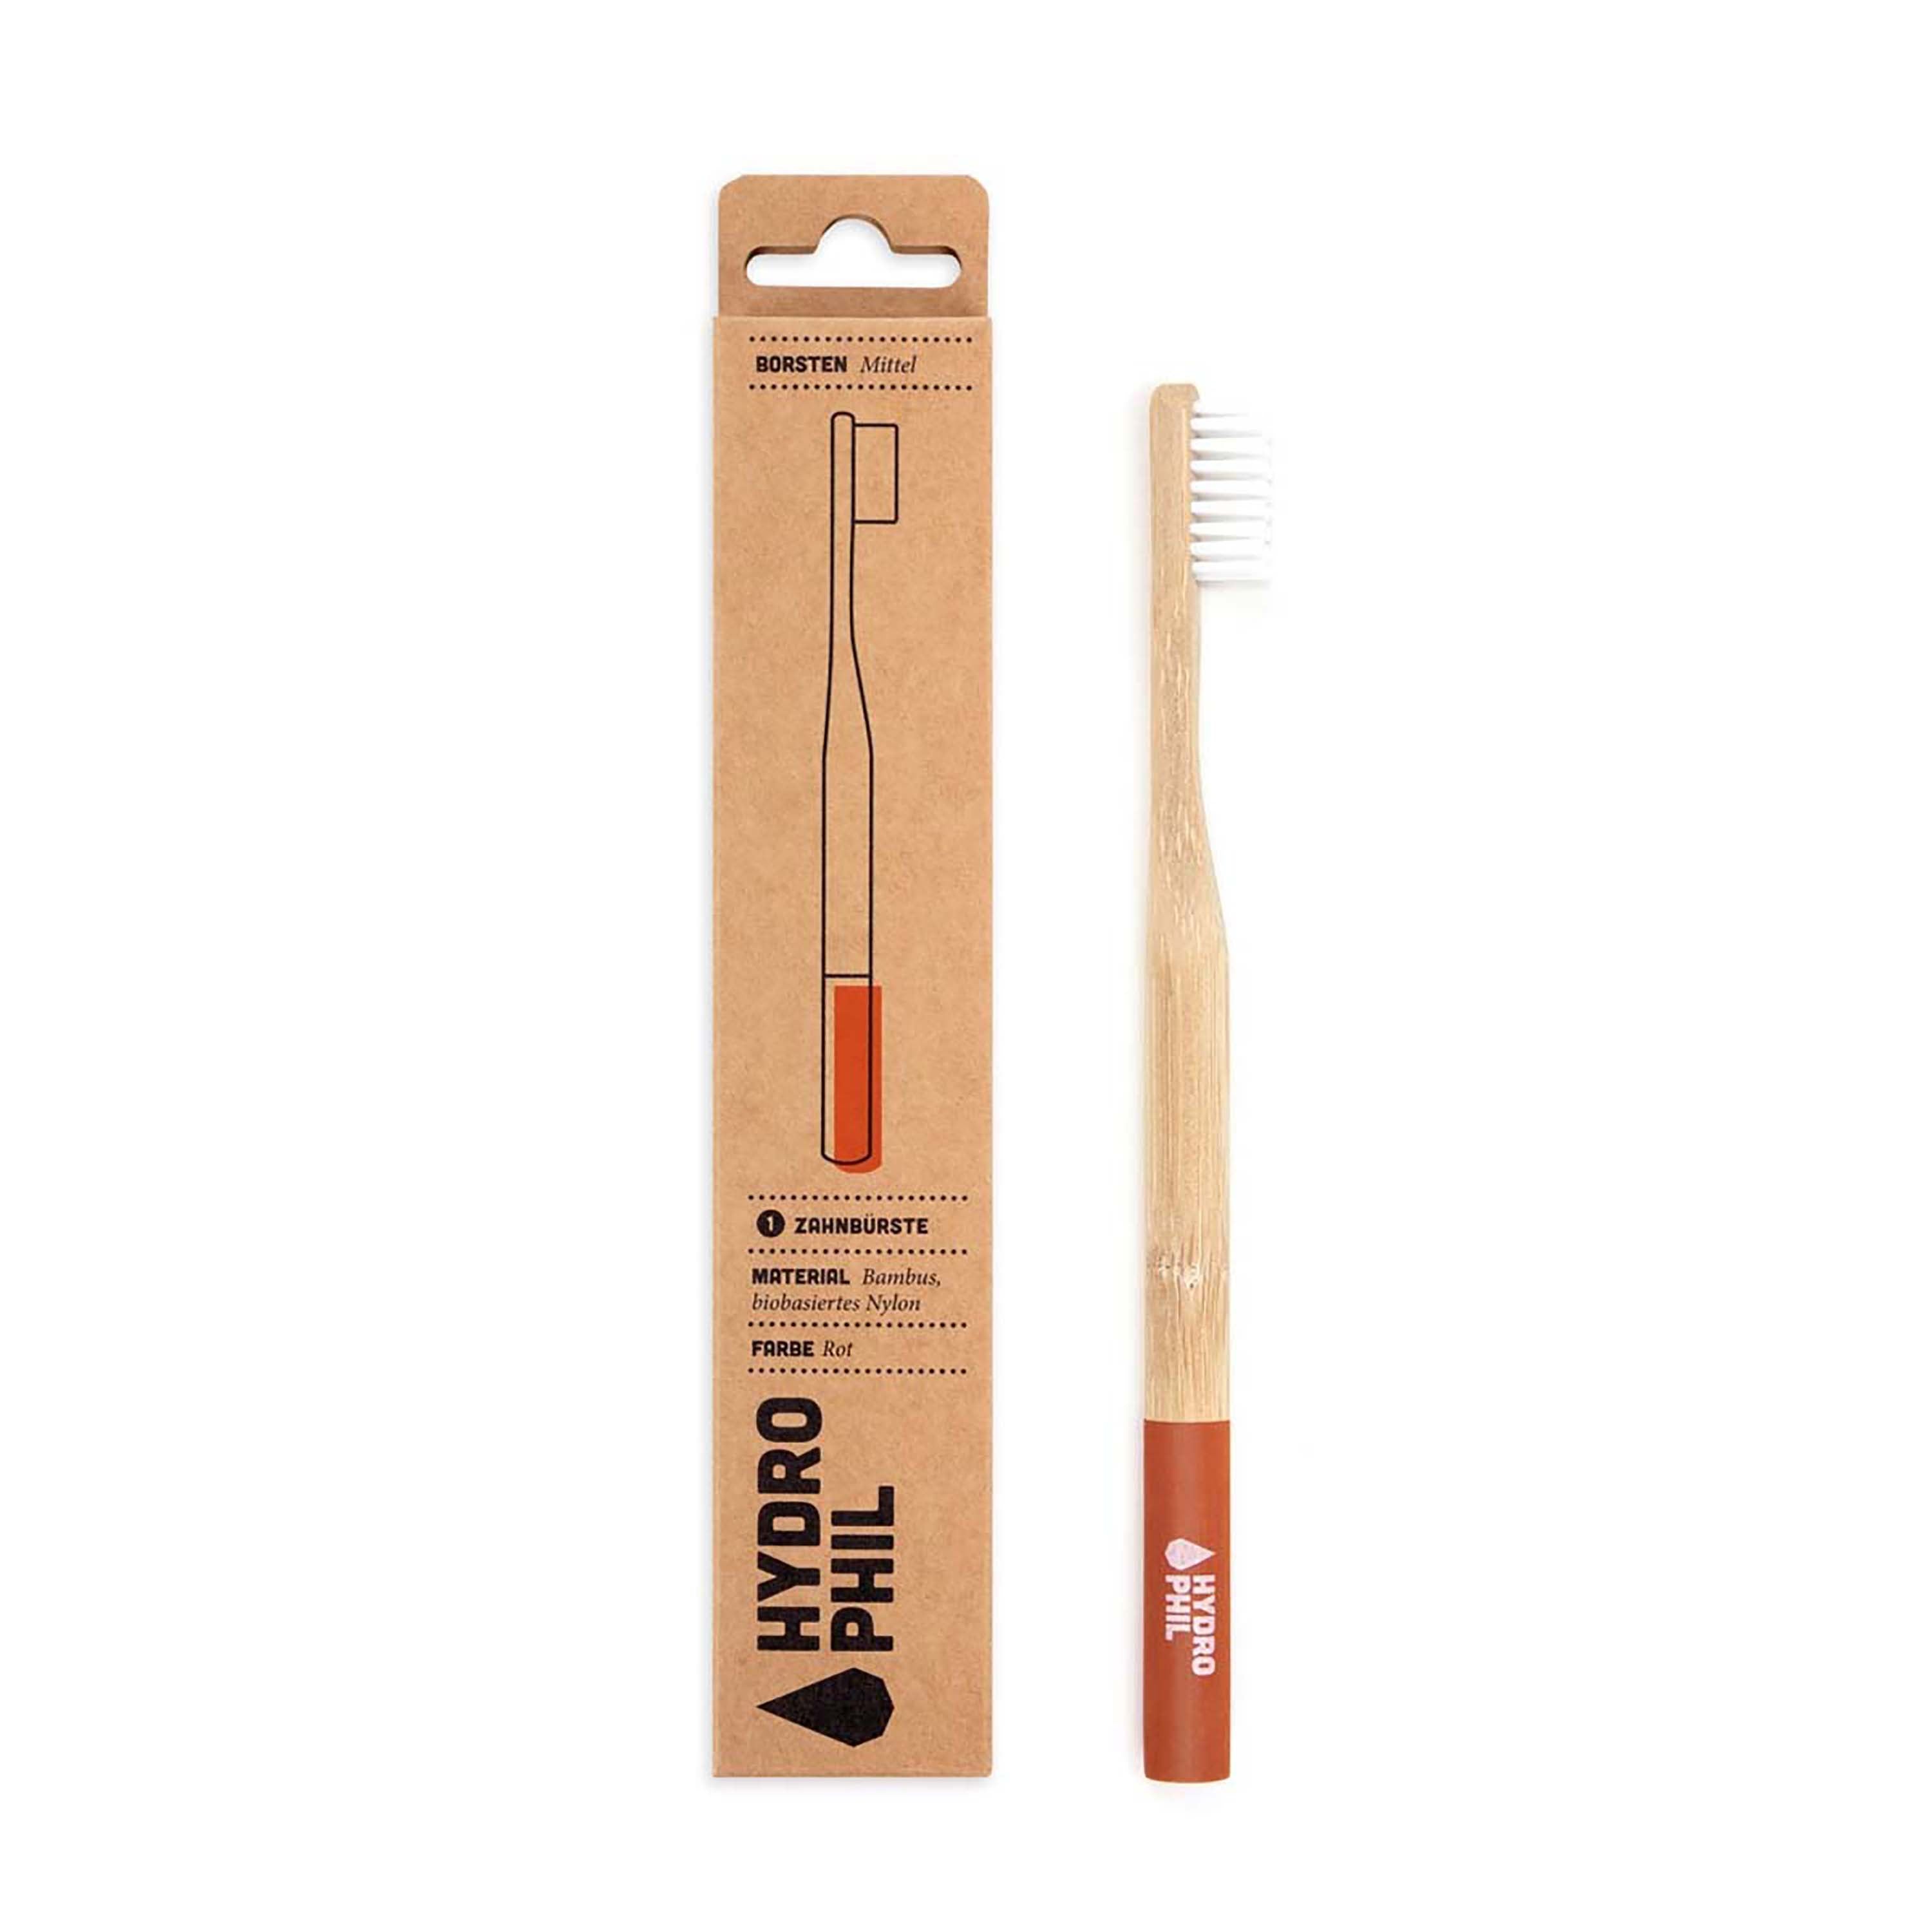 Hydrophil Bamboo Medium Toothbrush